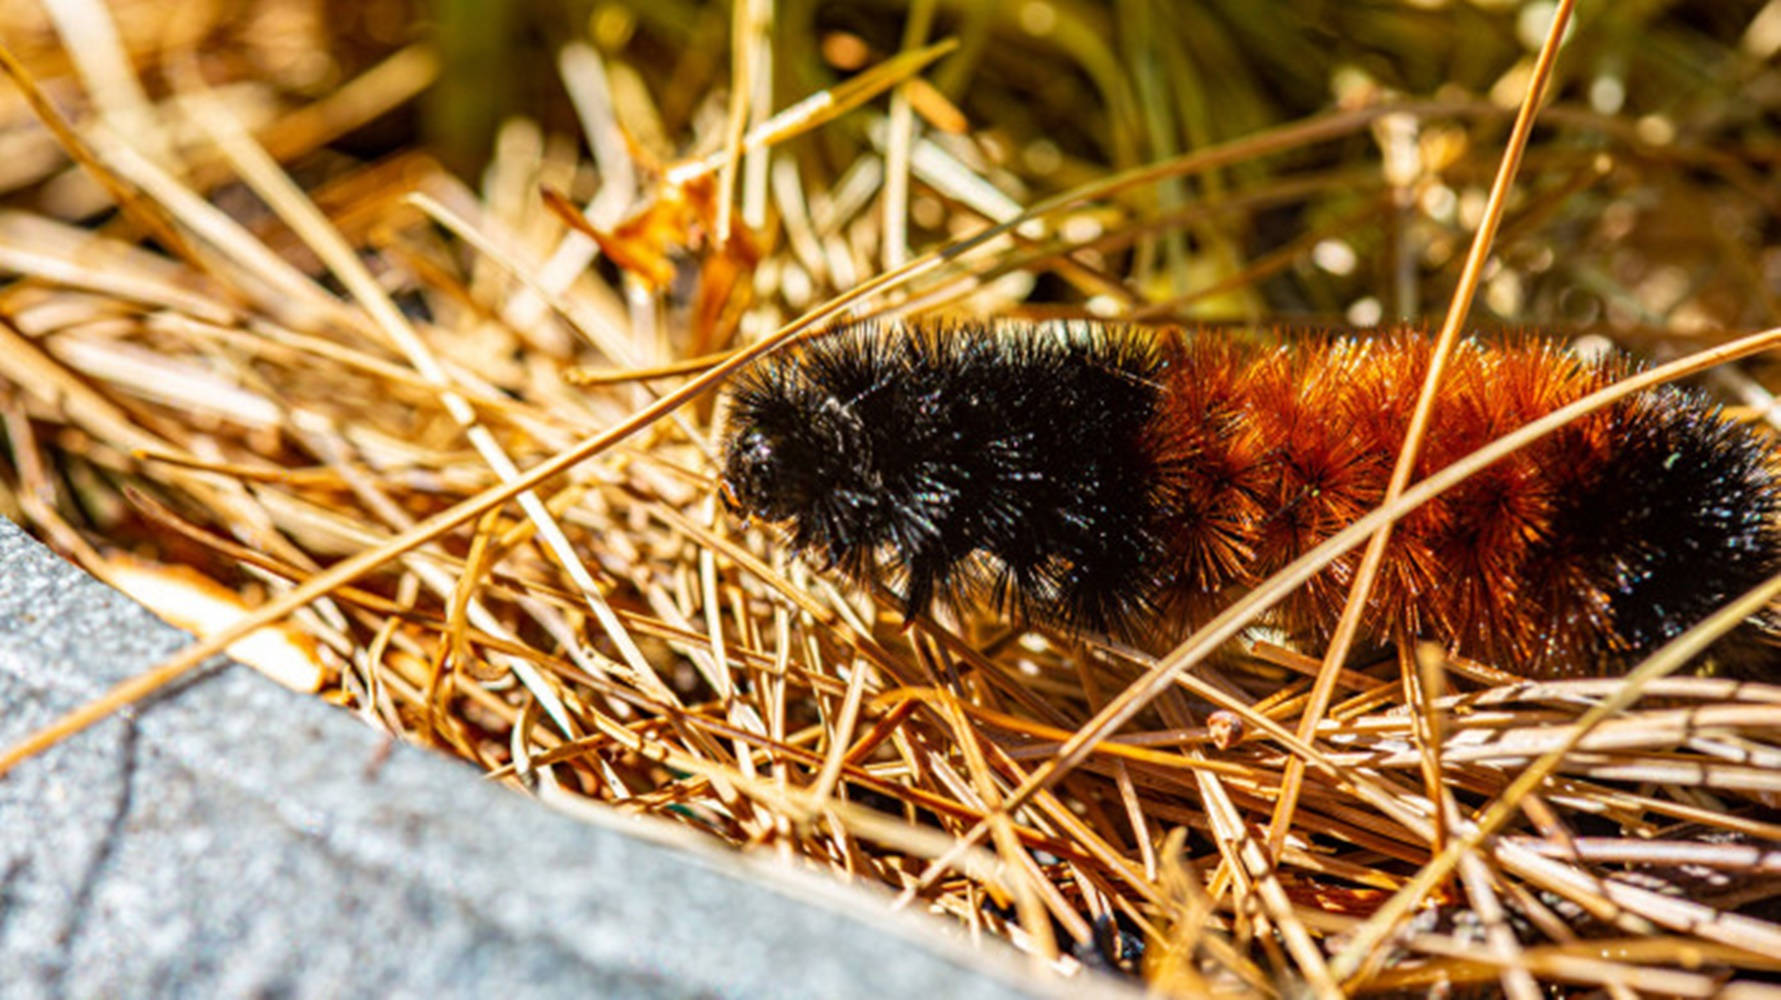 Striking Caterpillar Close-up Amidst Haystack Background